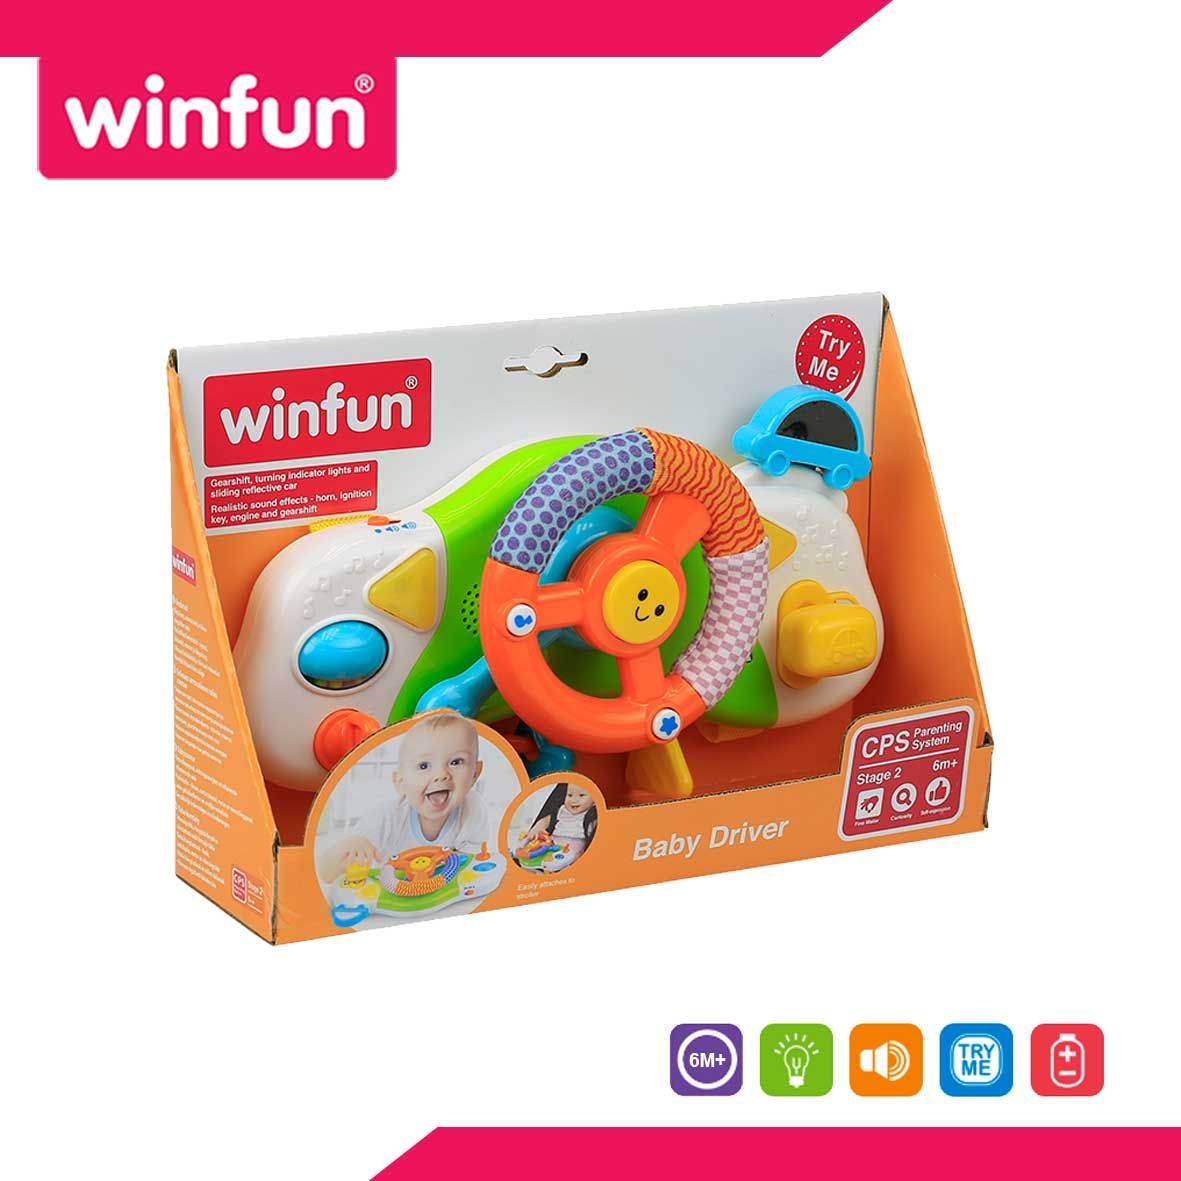 WinFun Baby Crib Driver - 1